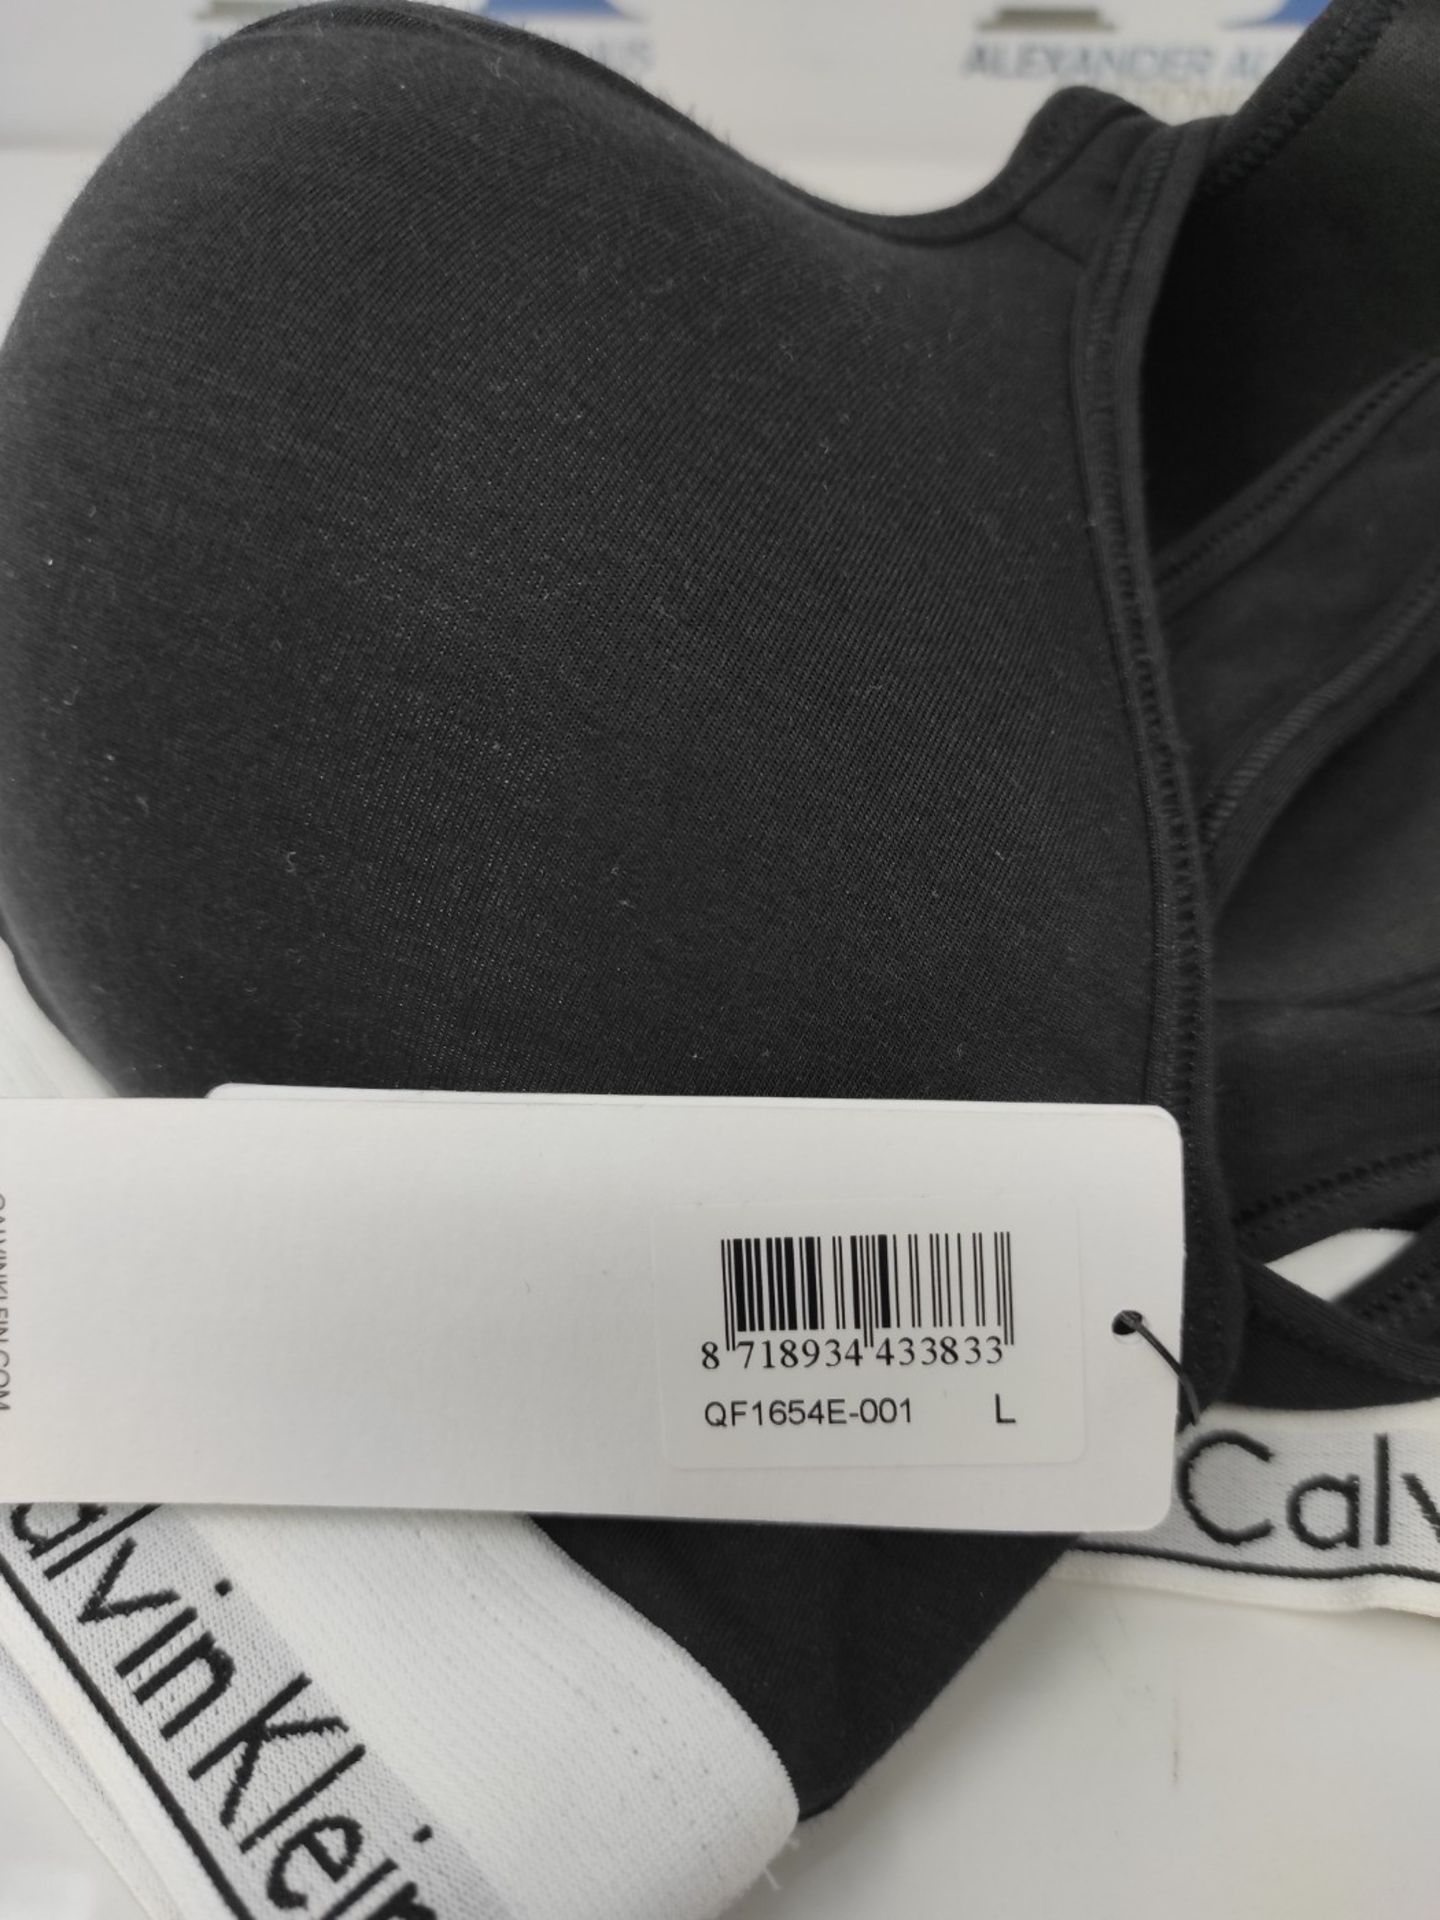 Calvin Klein Jeans Women's Bralette Lift Bra with Padding, Black - Image 3 of 3